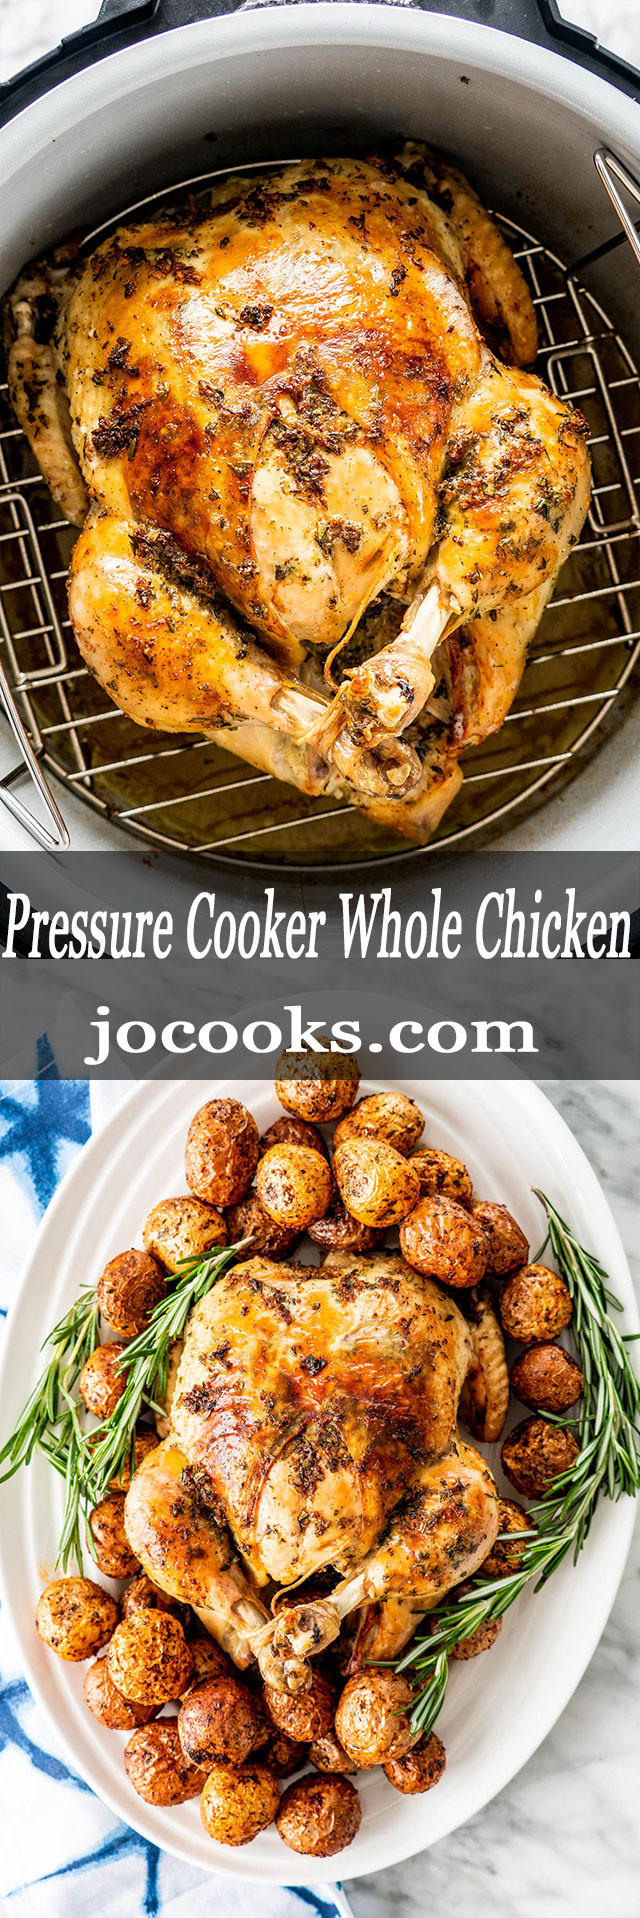 Whole Chicken In Pressure Cooker
 Pressure Cooker Whole Chicken Jo Cooks